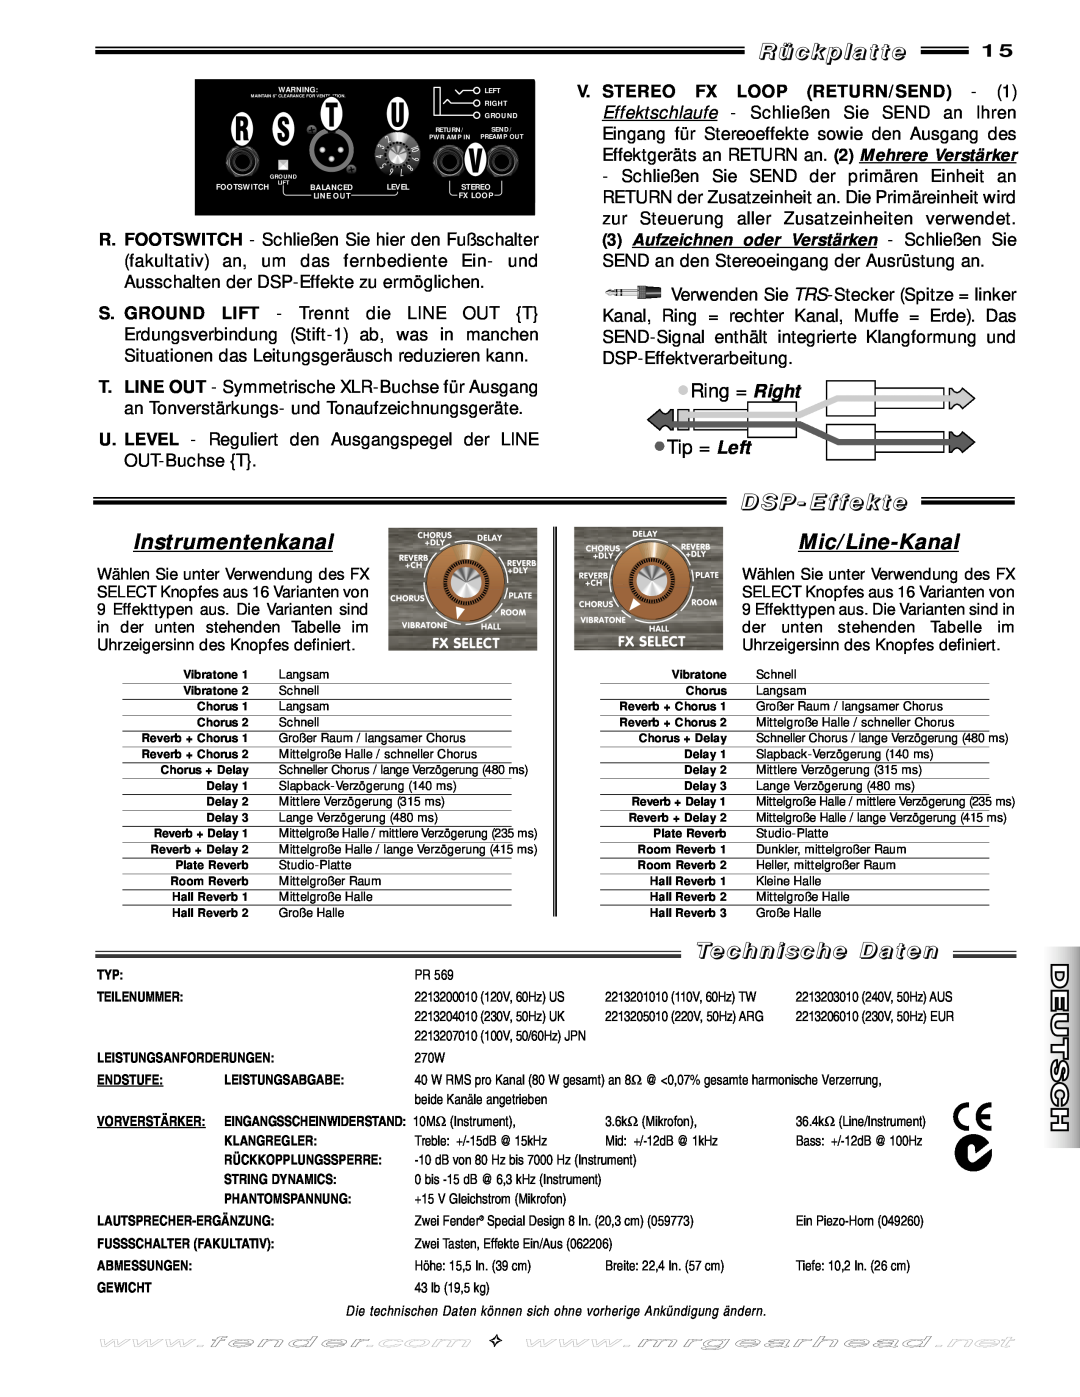 Fender Stereo Amplifier manual R ü c k p l a t t e, Instrumentenkanal, D S P - E ff e k t e, Mic/Line-Kanal 